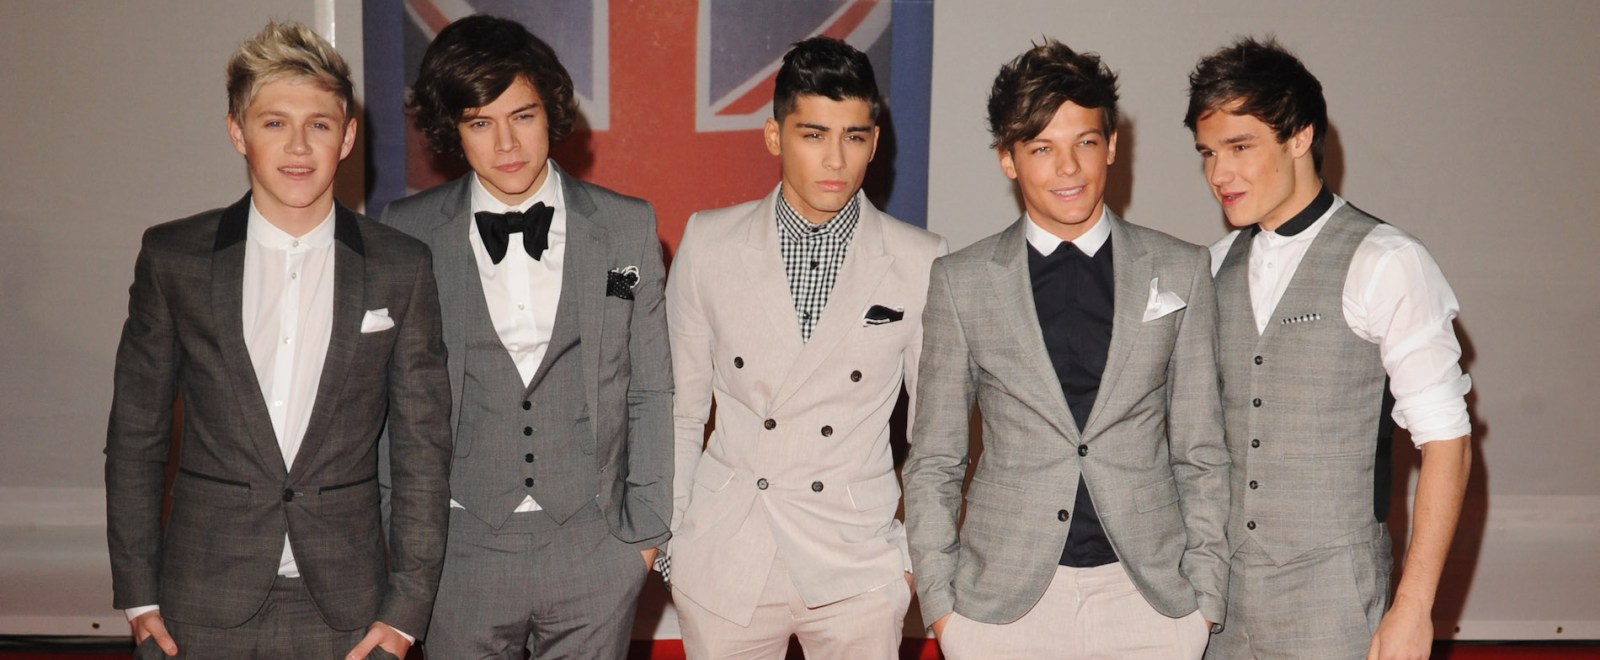 One Direction Niall Horan Harry Styles Zayn Malik Louis Tomlinson Liam Payne BRITs Brit Awards 2012